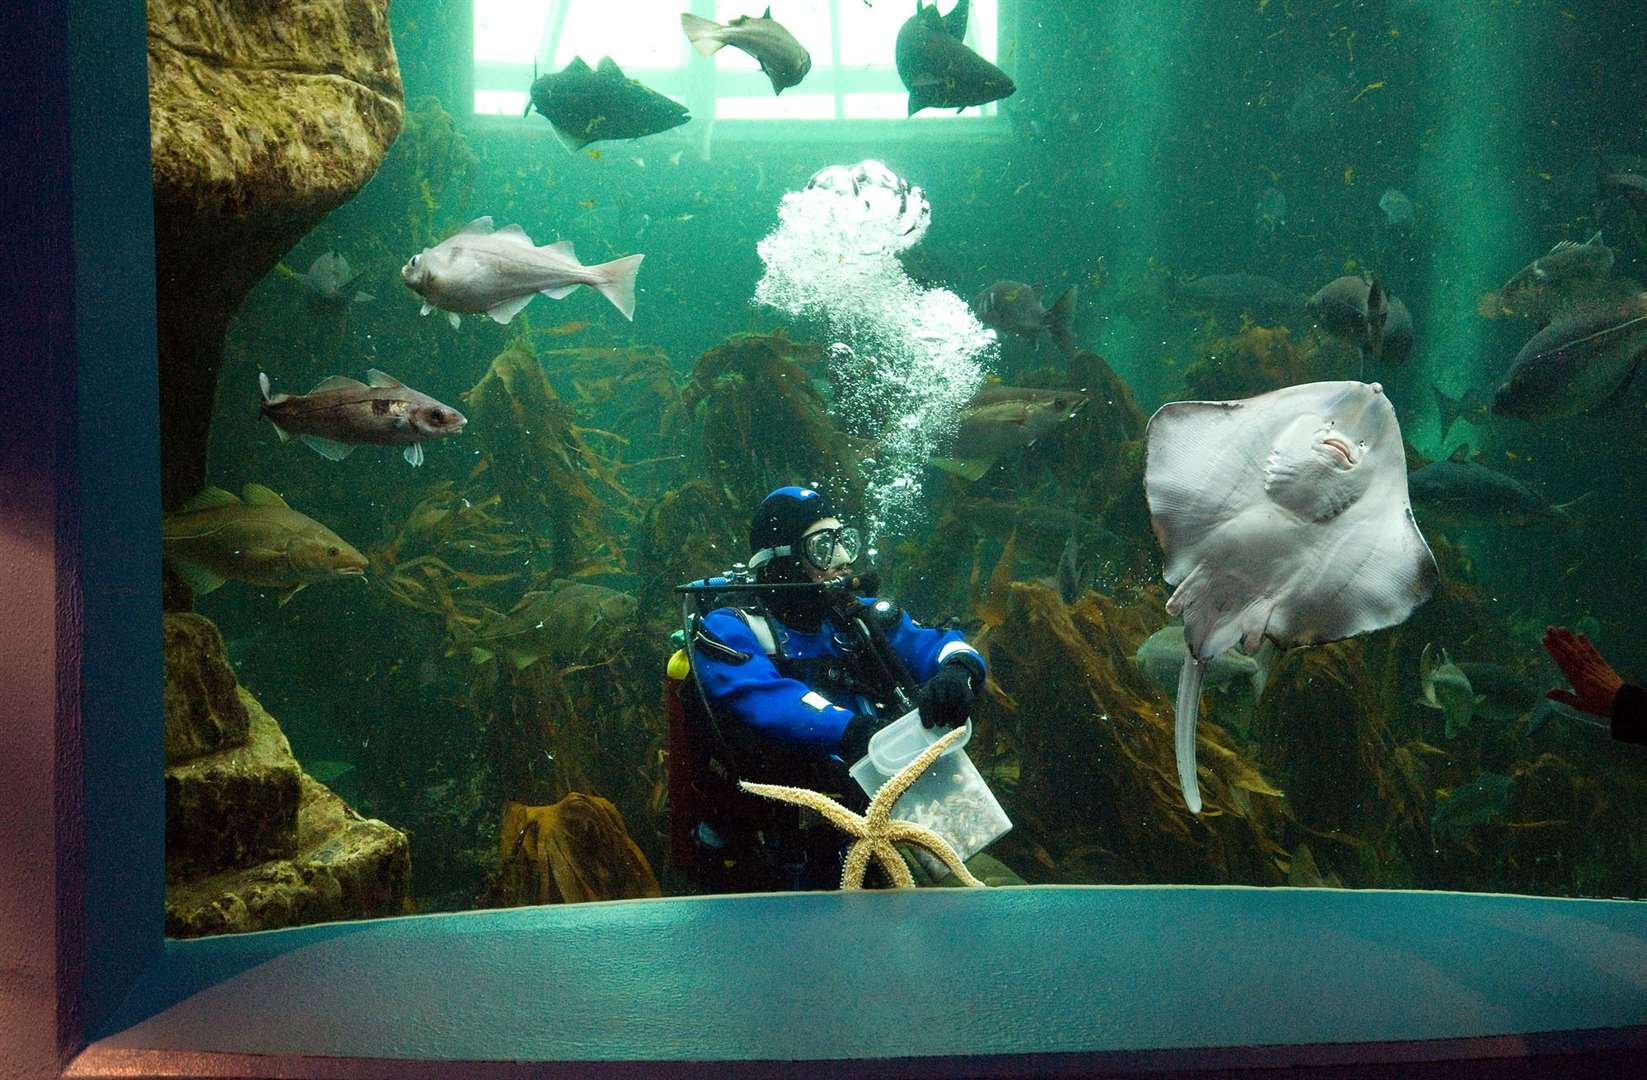 Macduff Marine Aquarium will reopen its doors on Tuesday.